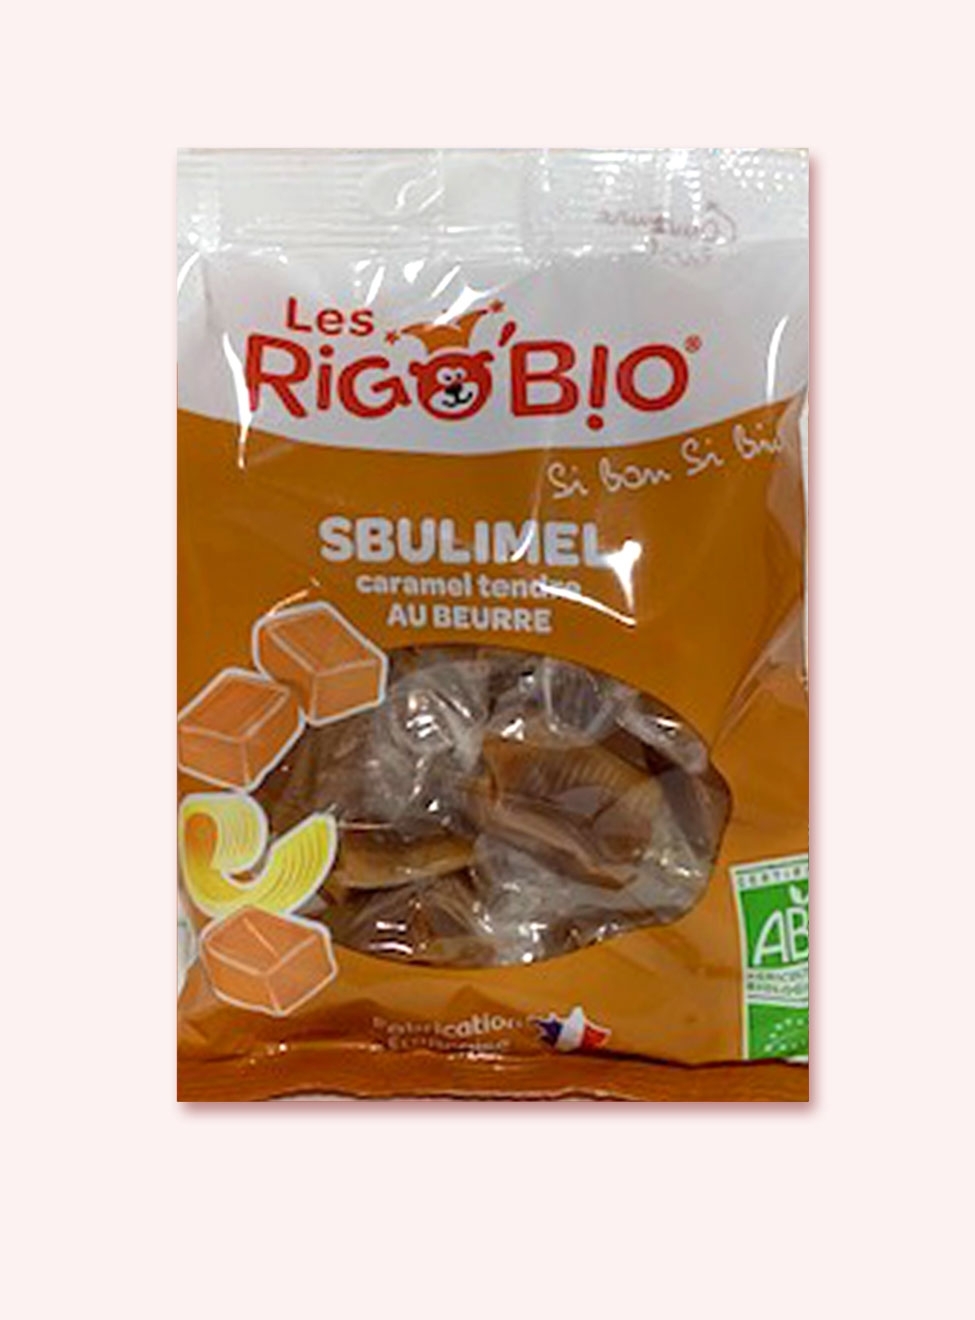 RIGOBIO Sbulimel beurre sans gluten - sachet- Origine France- réf.4420